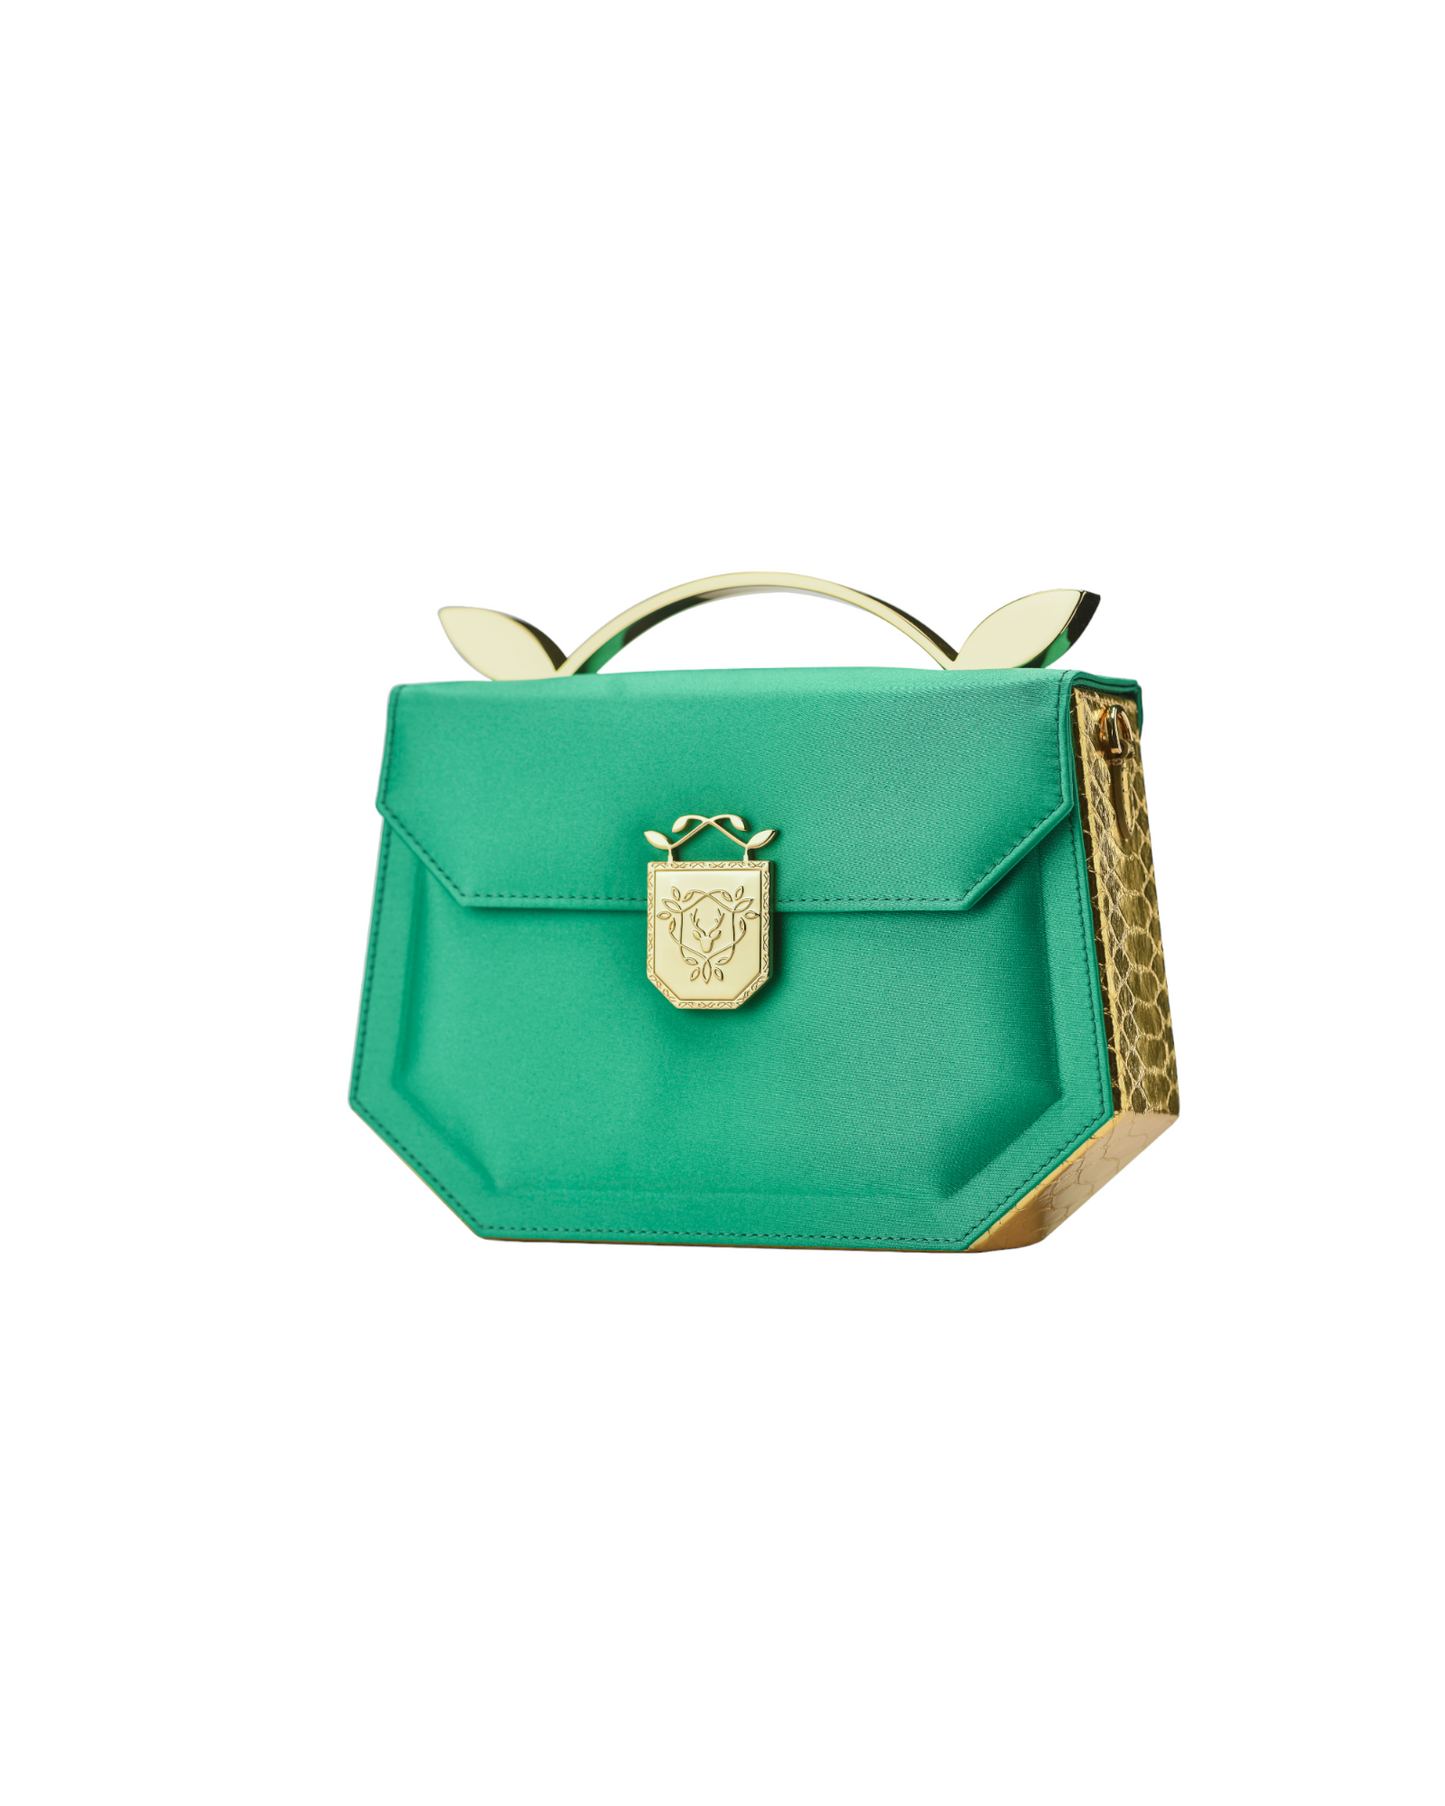 Rania Manasra Shoulder Satin Green Bag